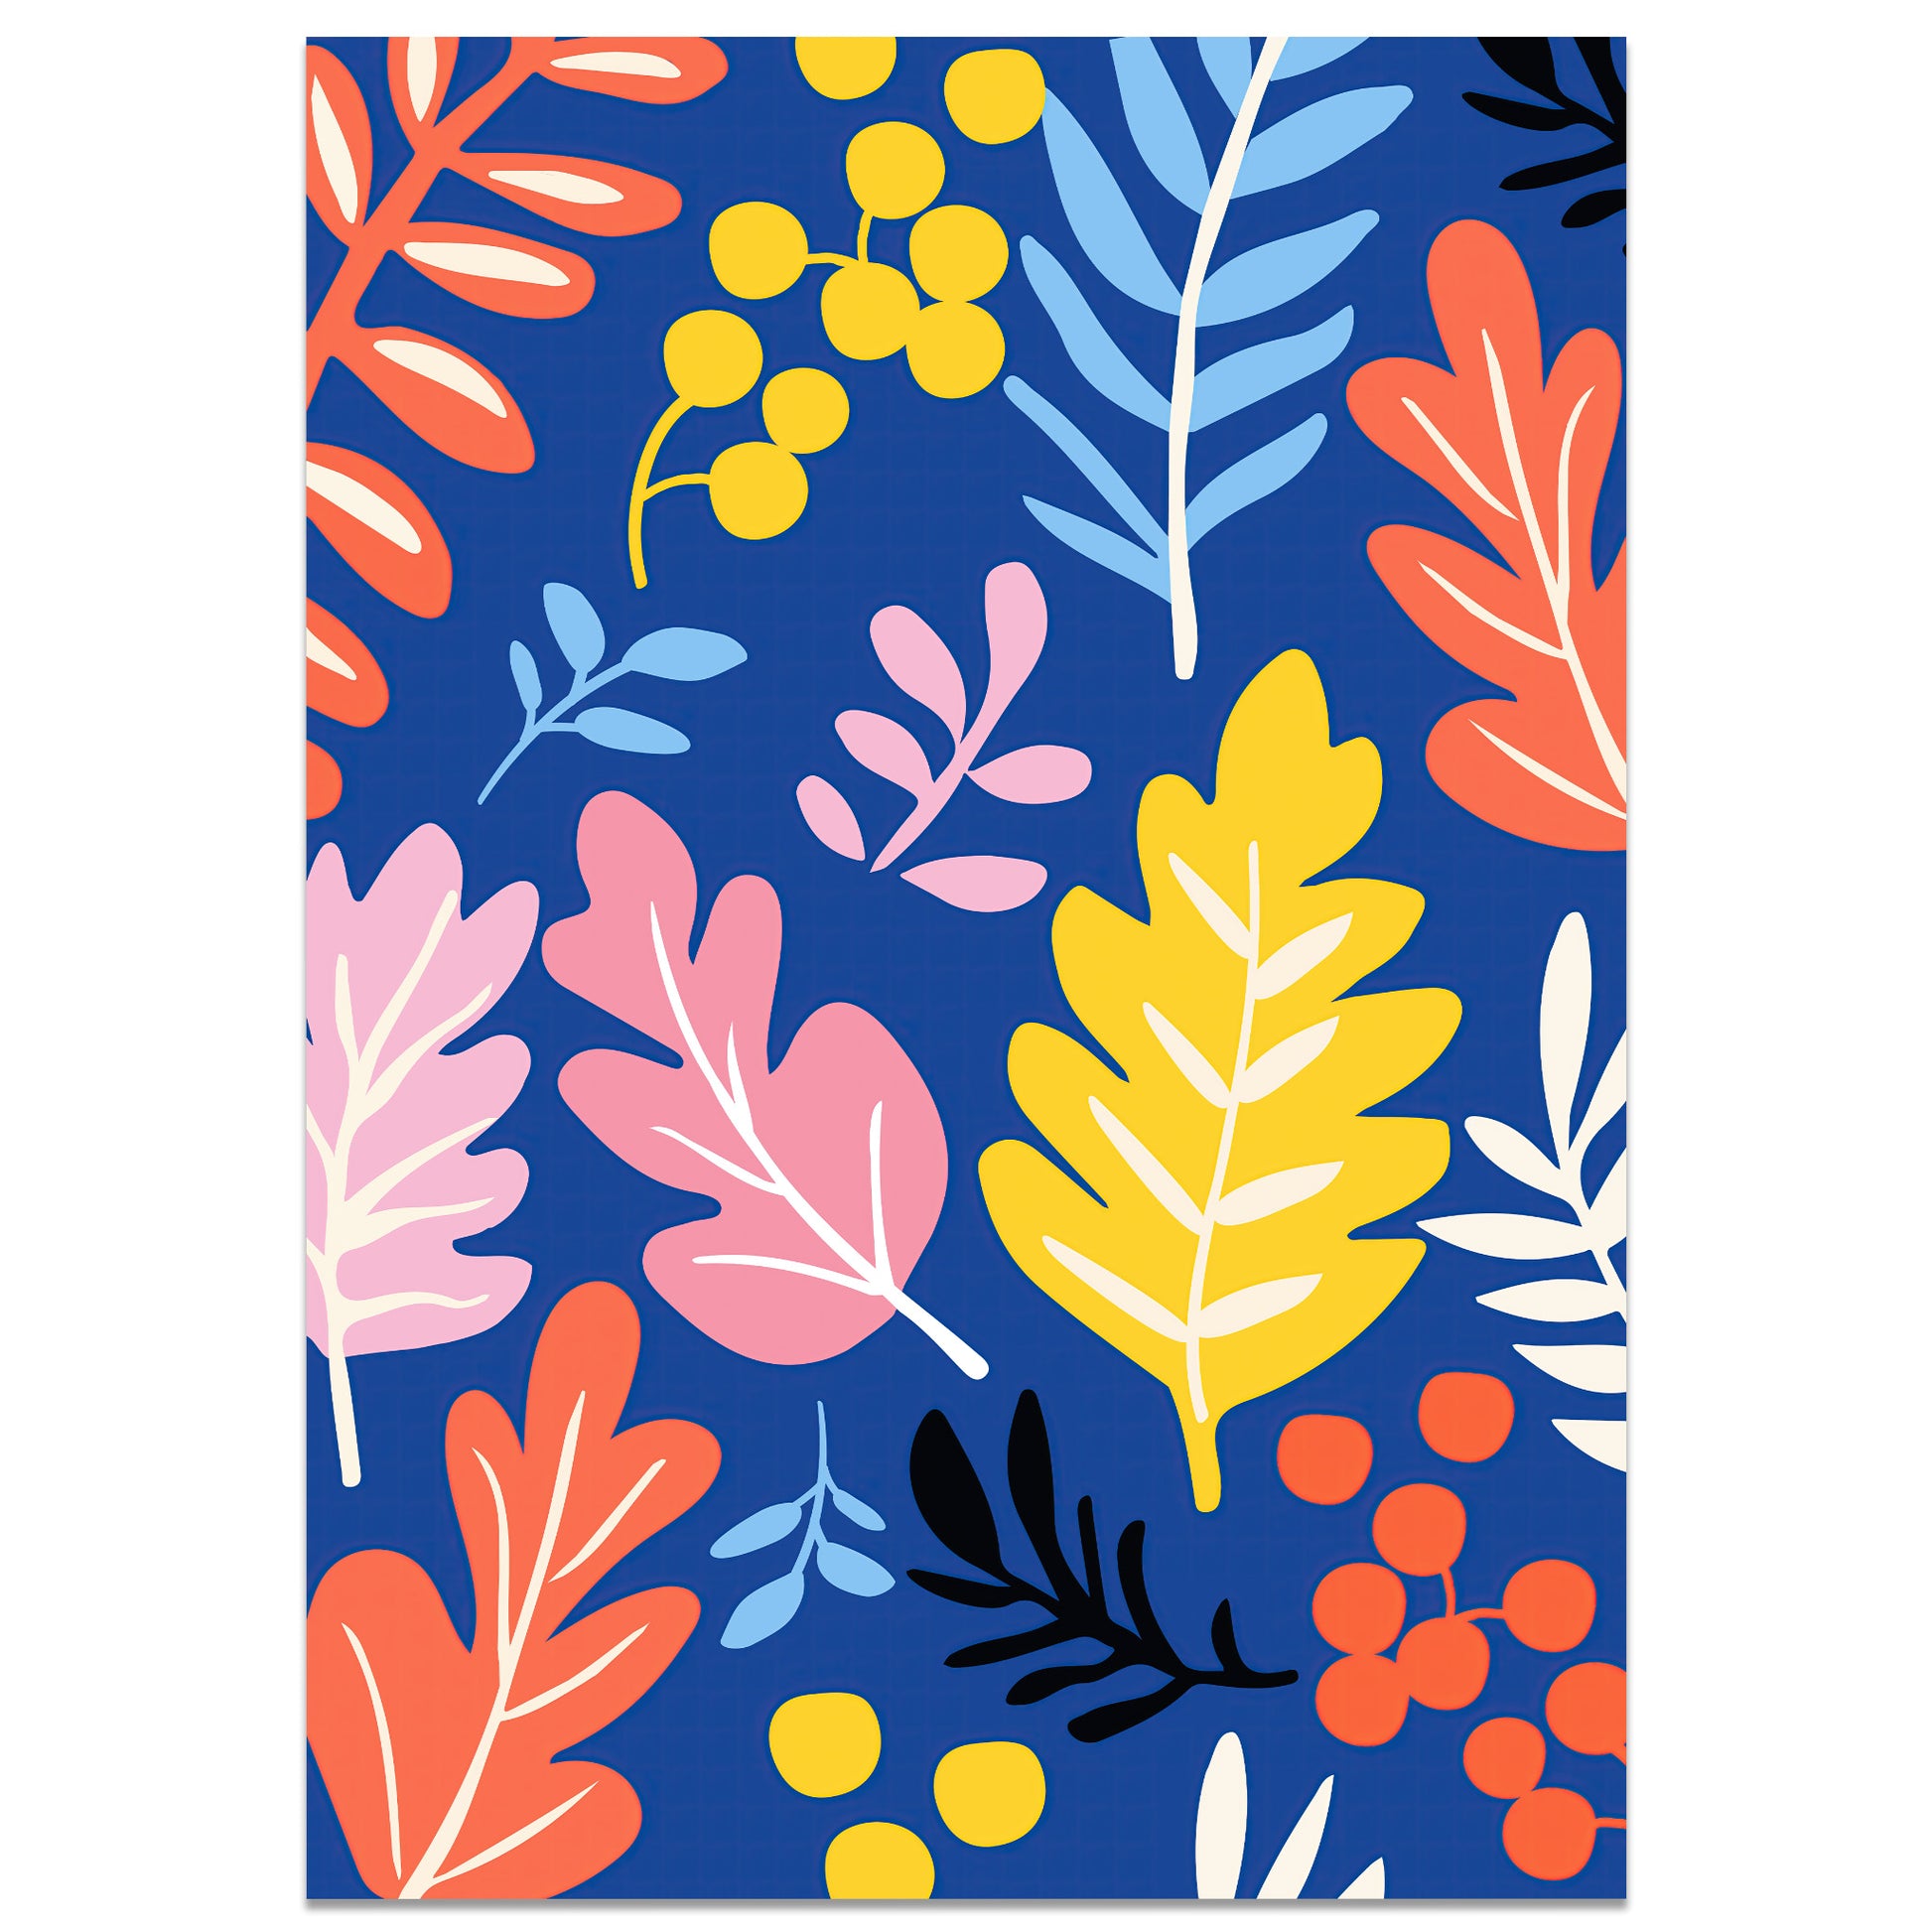 Vibrant botanical print with blue background